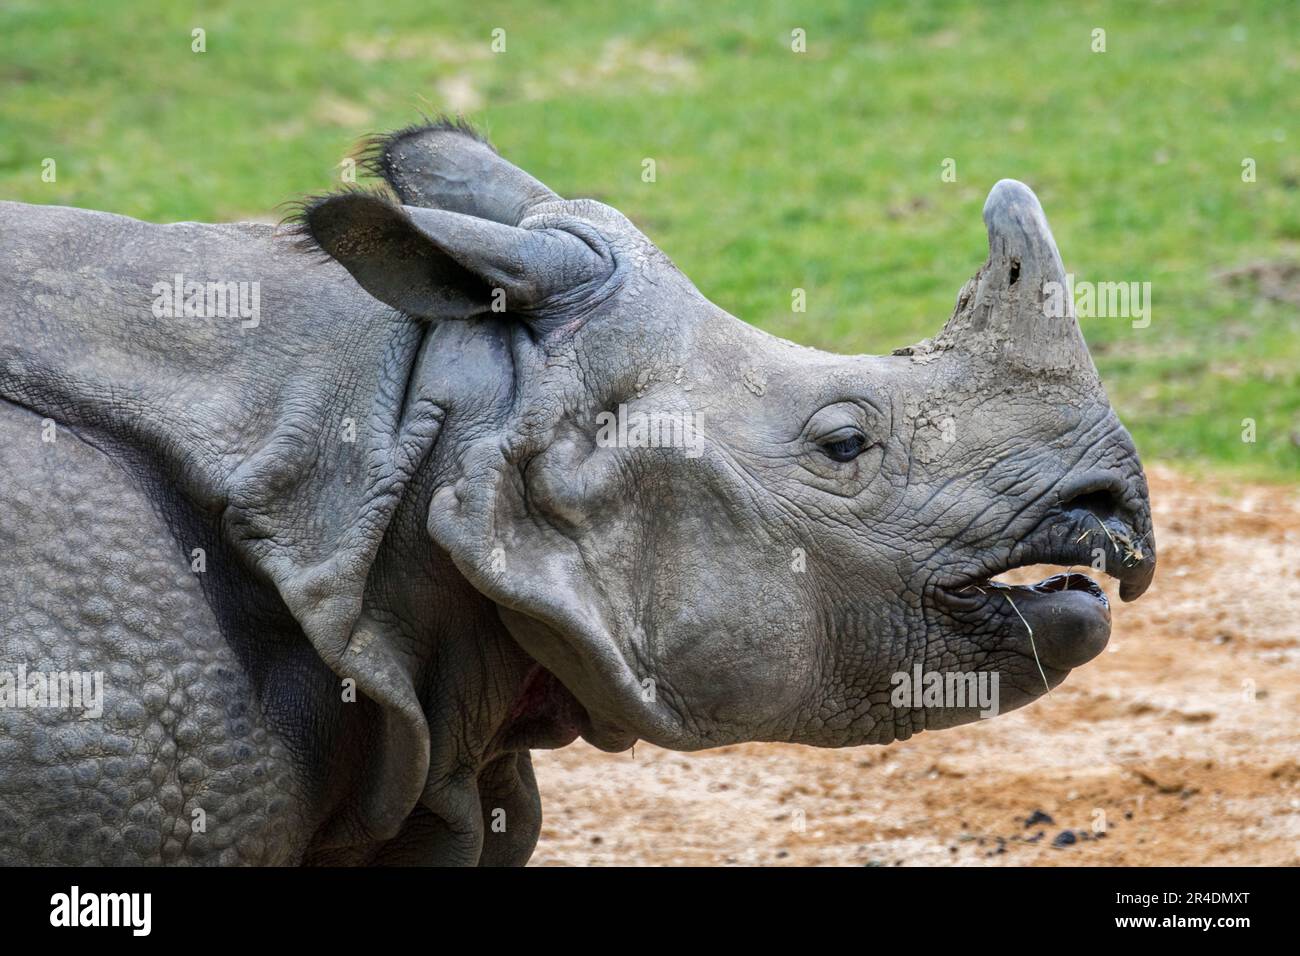 Indian rhinoceros / Indian rhino (Rhinoceros unicornis) close-up portrait, native to India, Nepal, Pakistan, Bangladesh and Bhutan Stock Photo